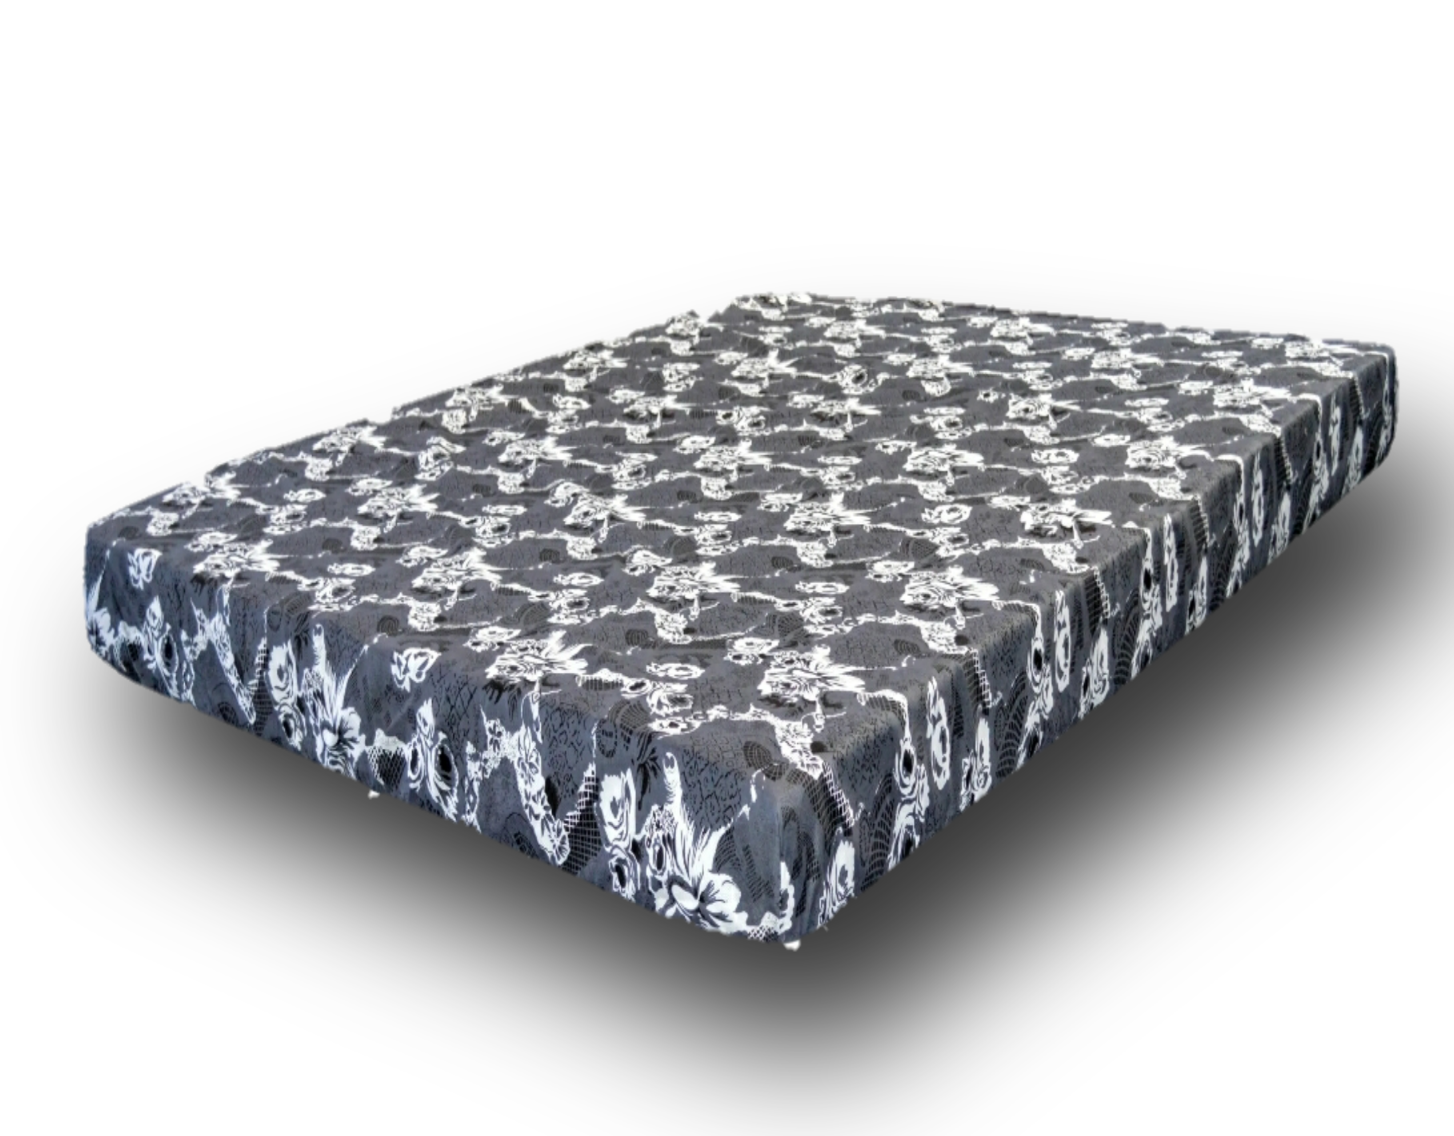 5 inch foam mattress